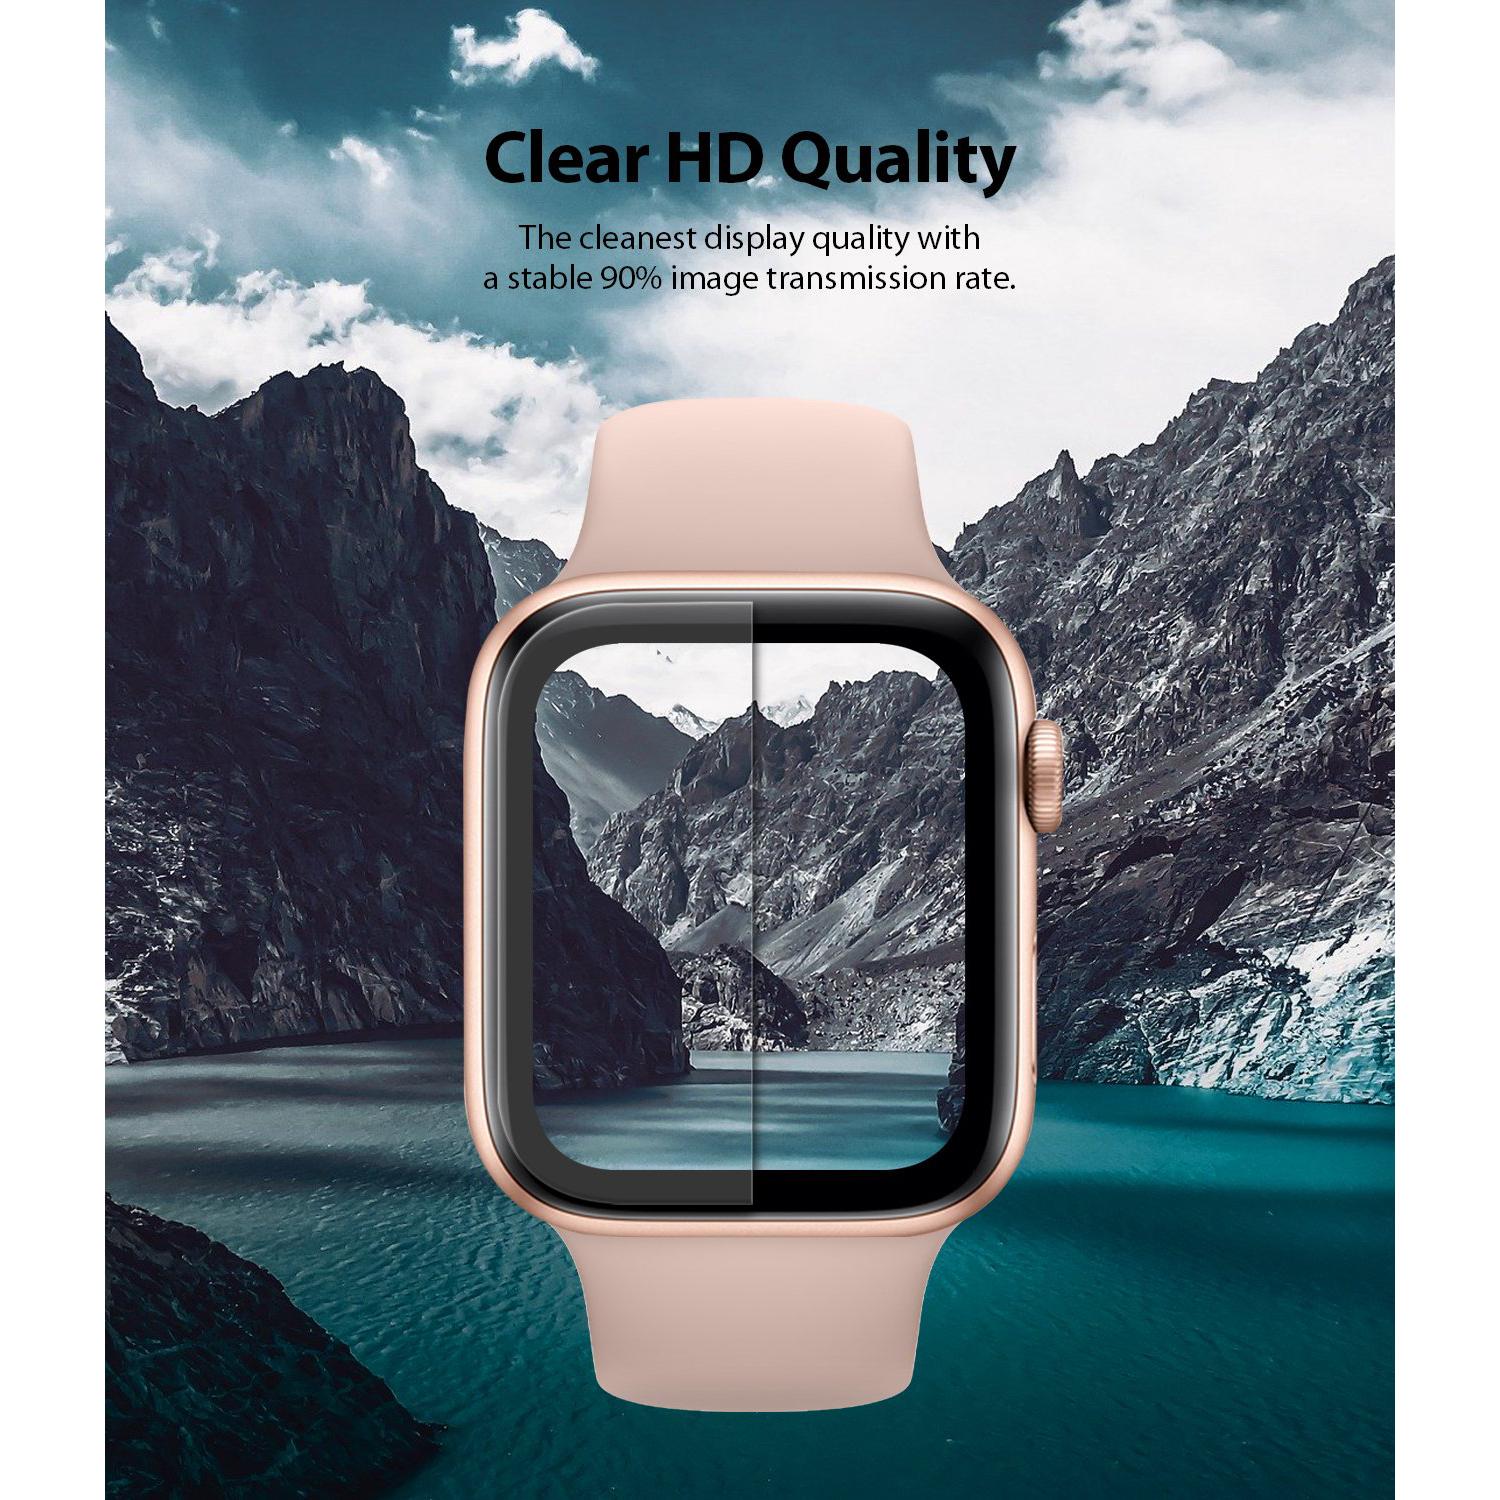 Easy Flex Apple Watch 40/41 mm (3-pack)